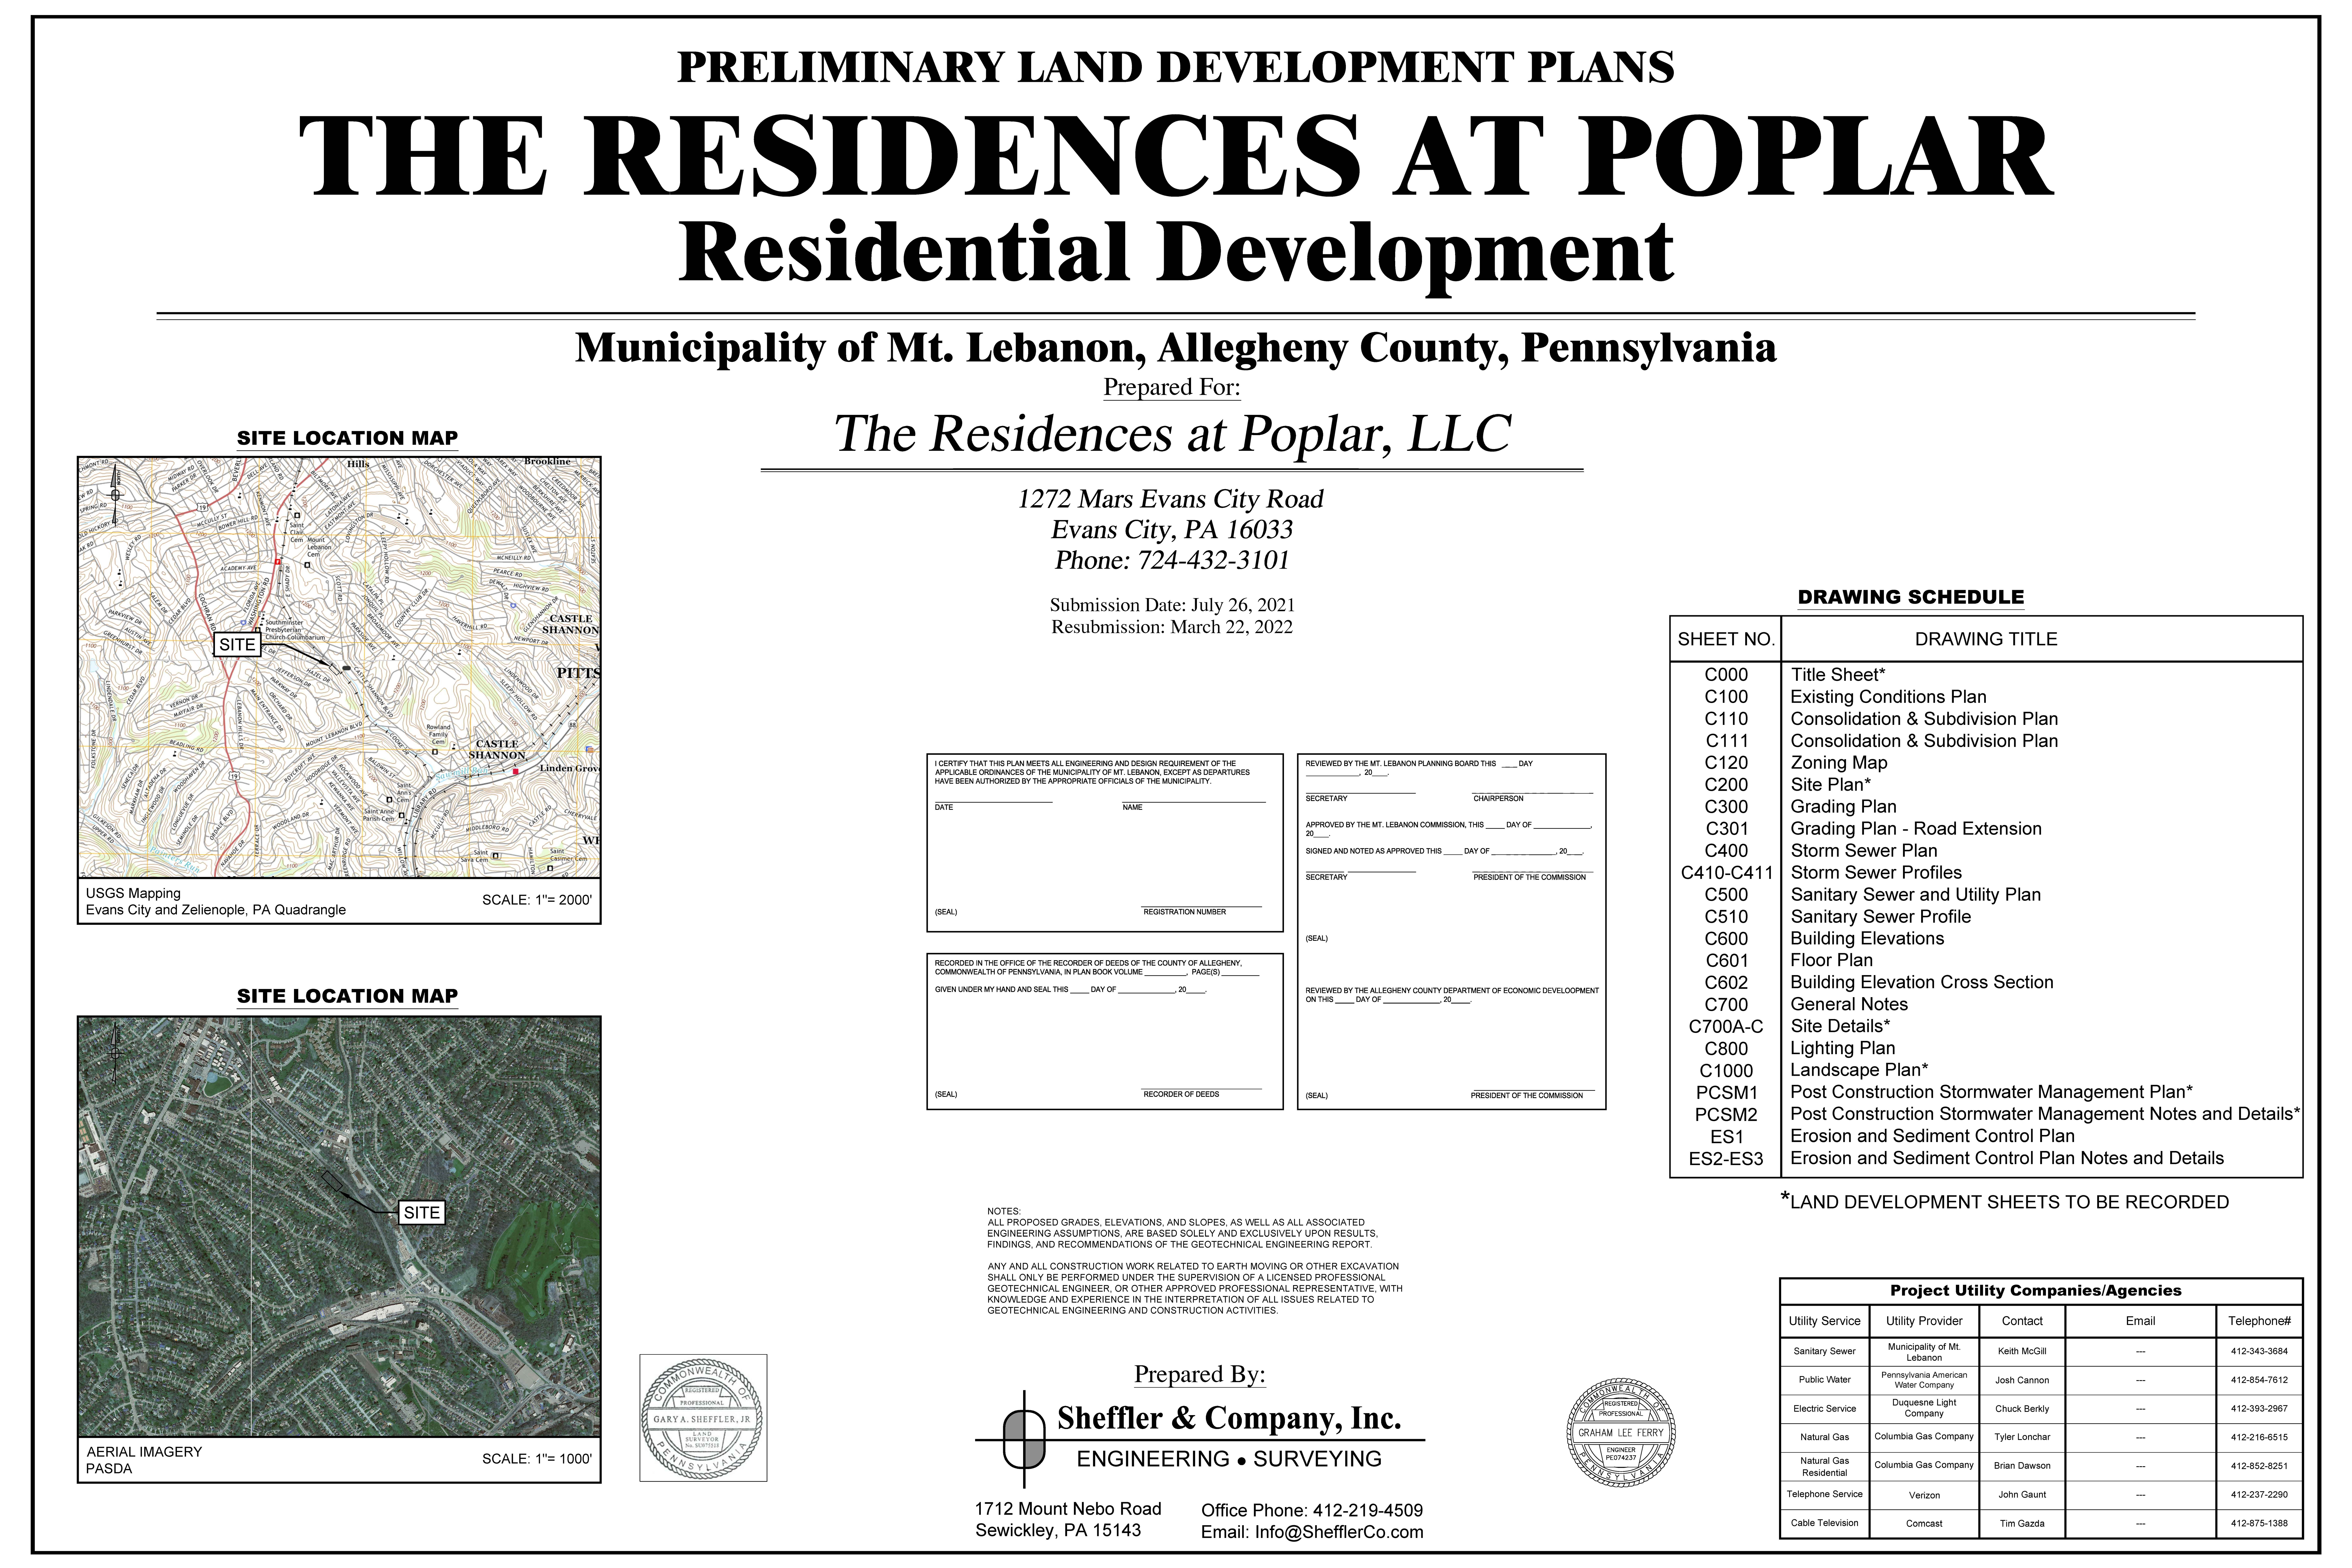 Preliminary Development plans for The Residences at Poplar